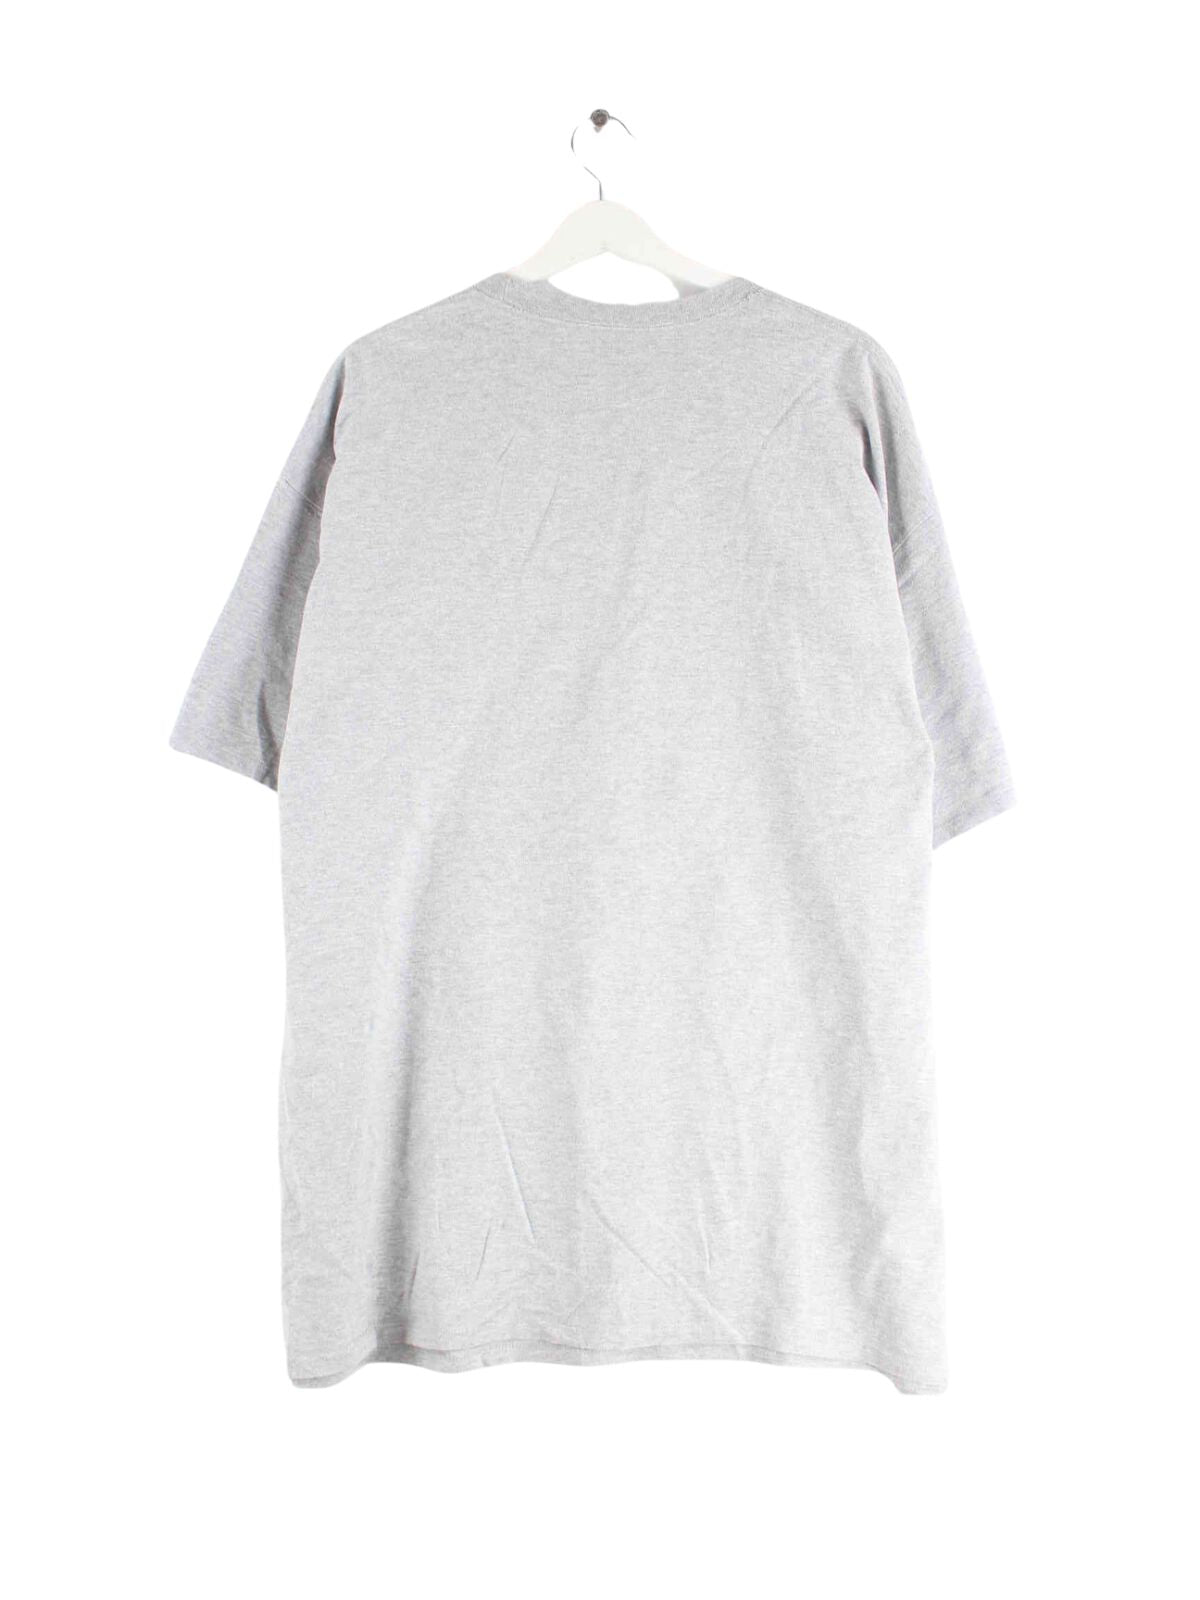 Champion Print T-Shirt Grau 3XL (back image)